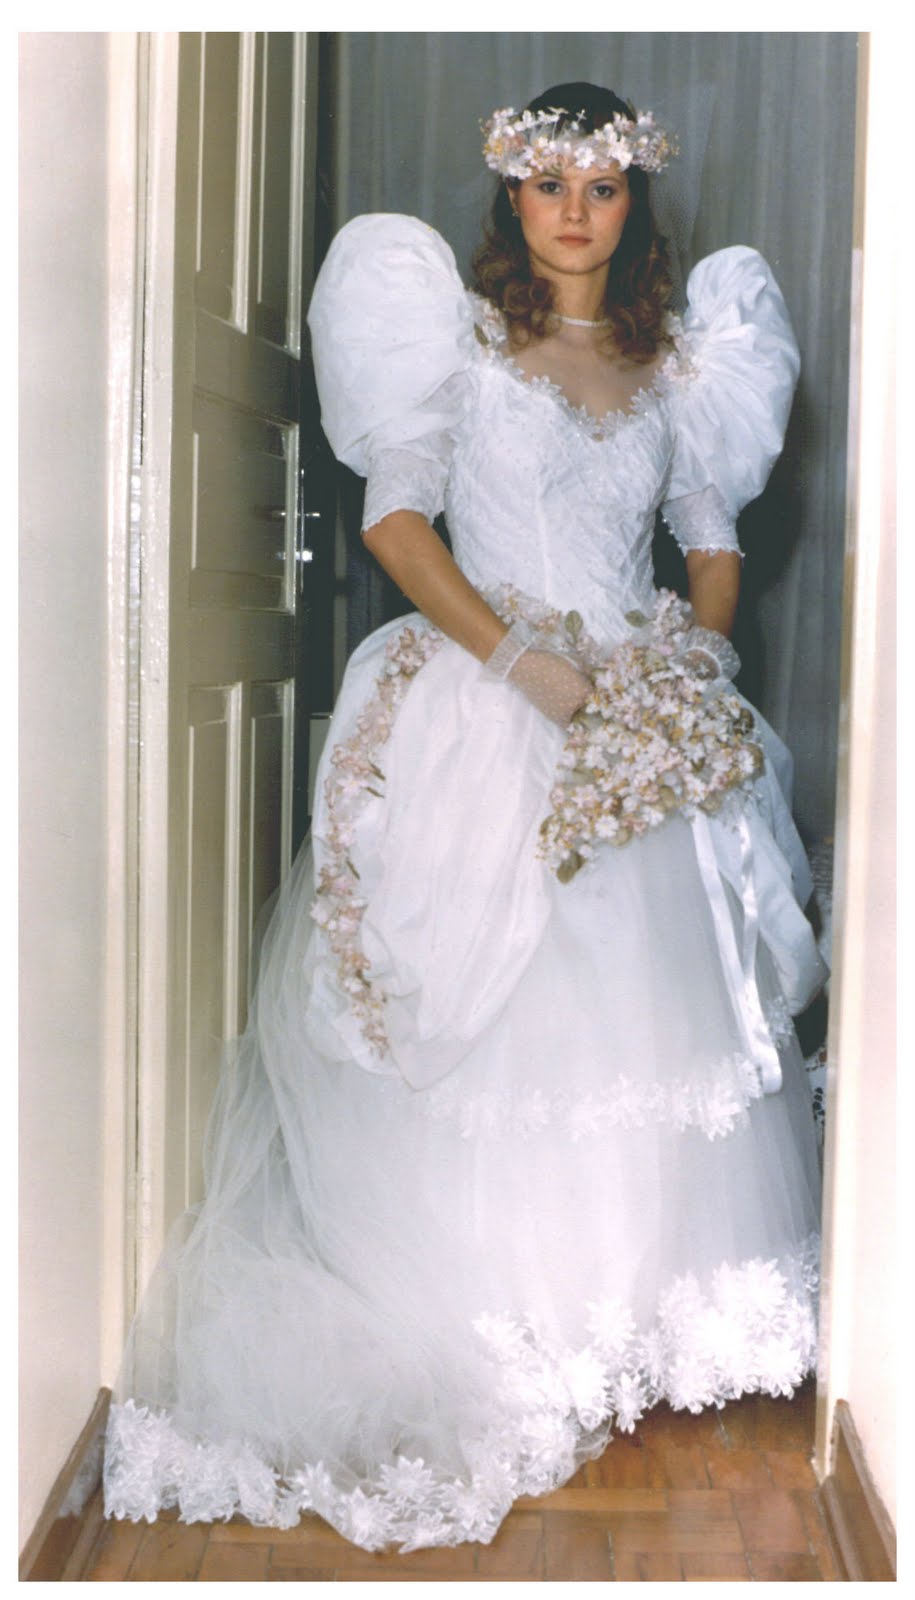 MARISOL, Vestido de noiva estilo princesa